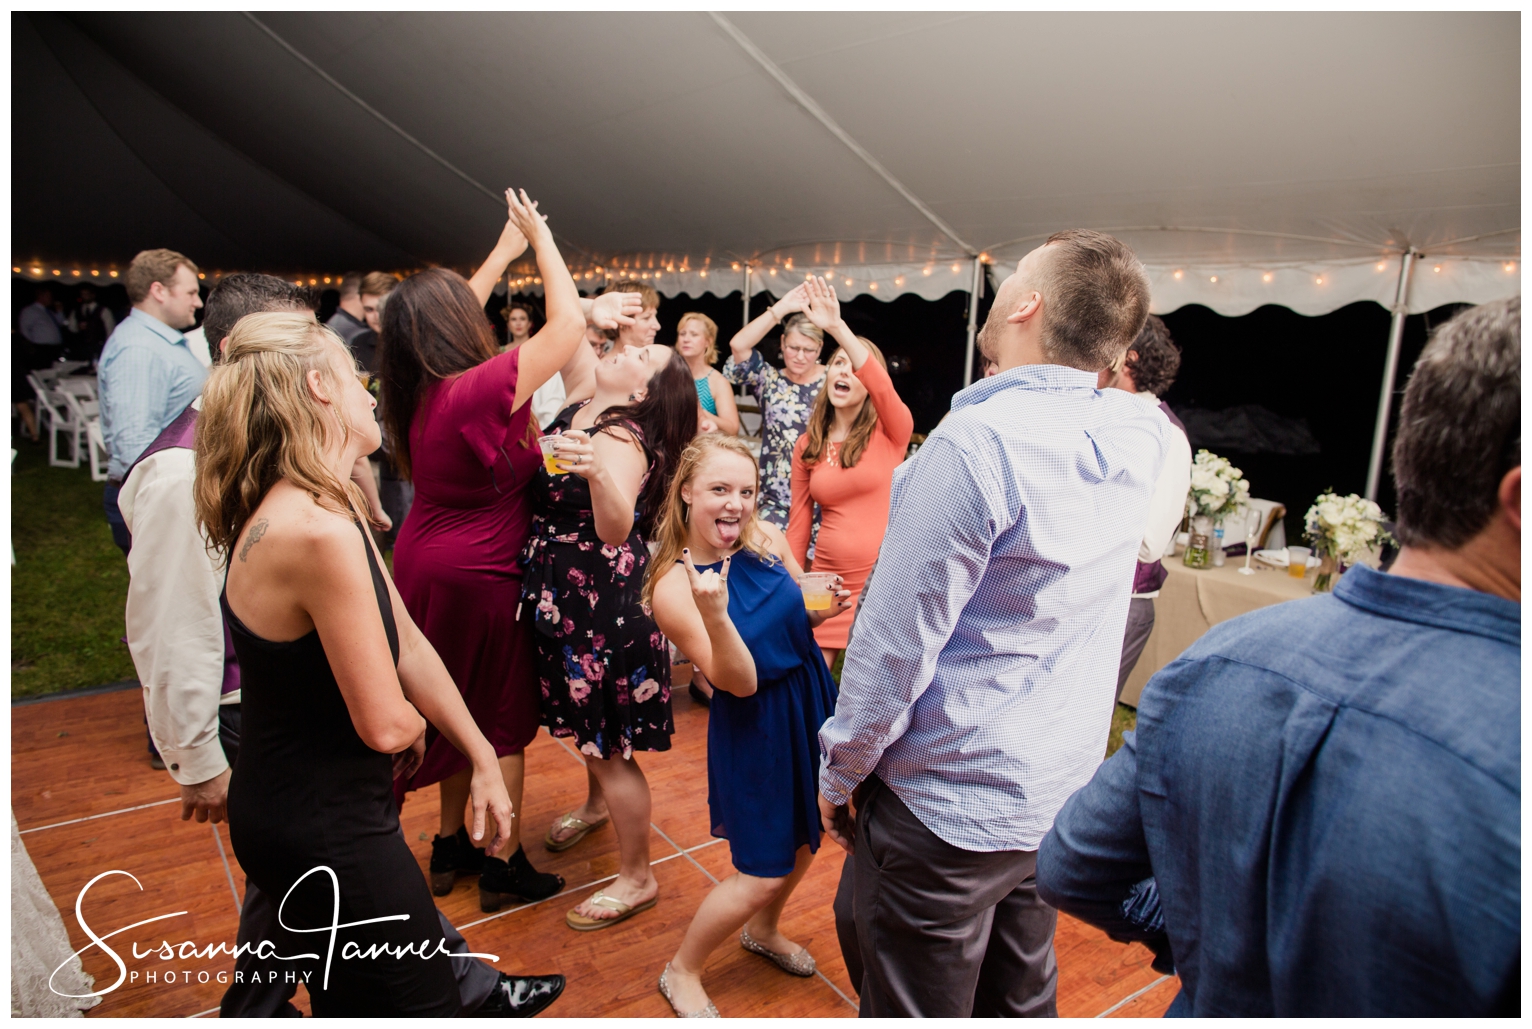 Indianapolis Outdoor Wedding, wedding guests dancing and having fun